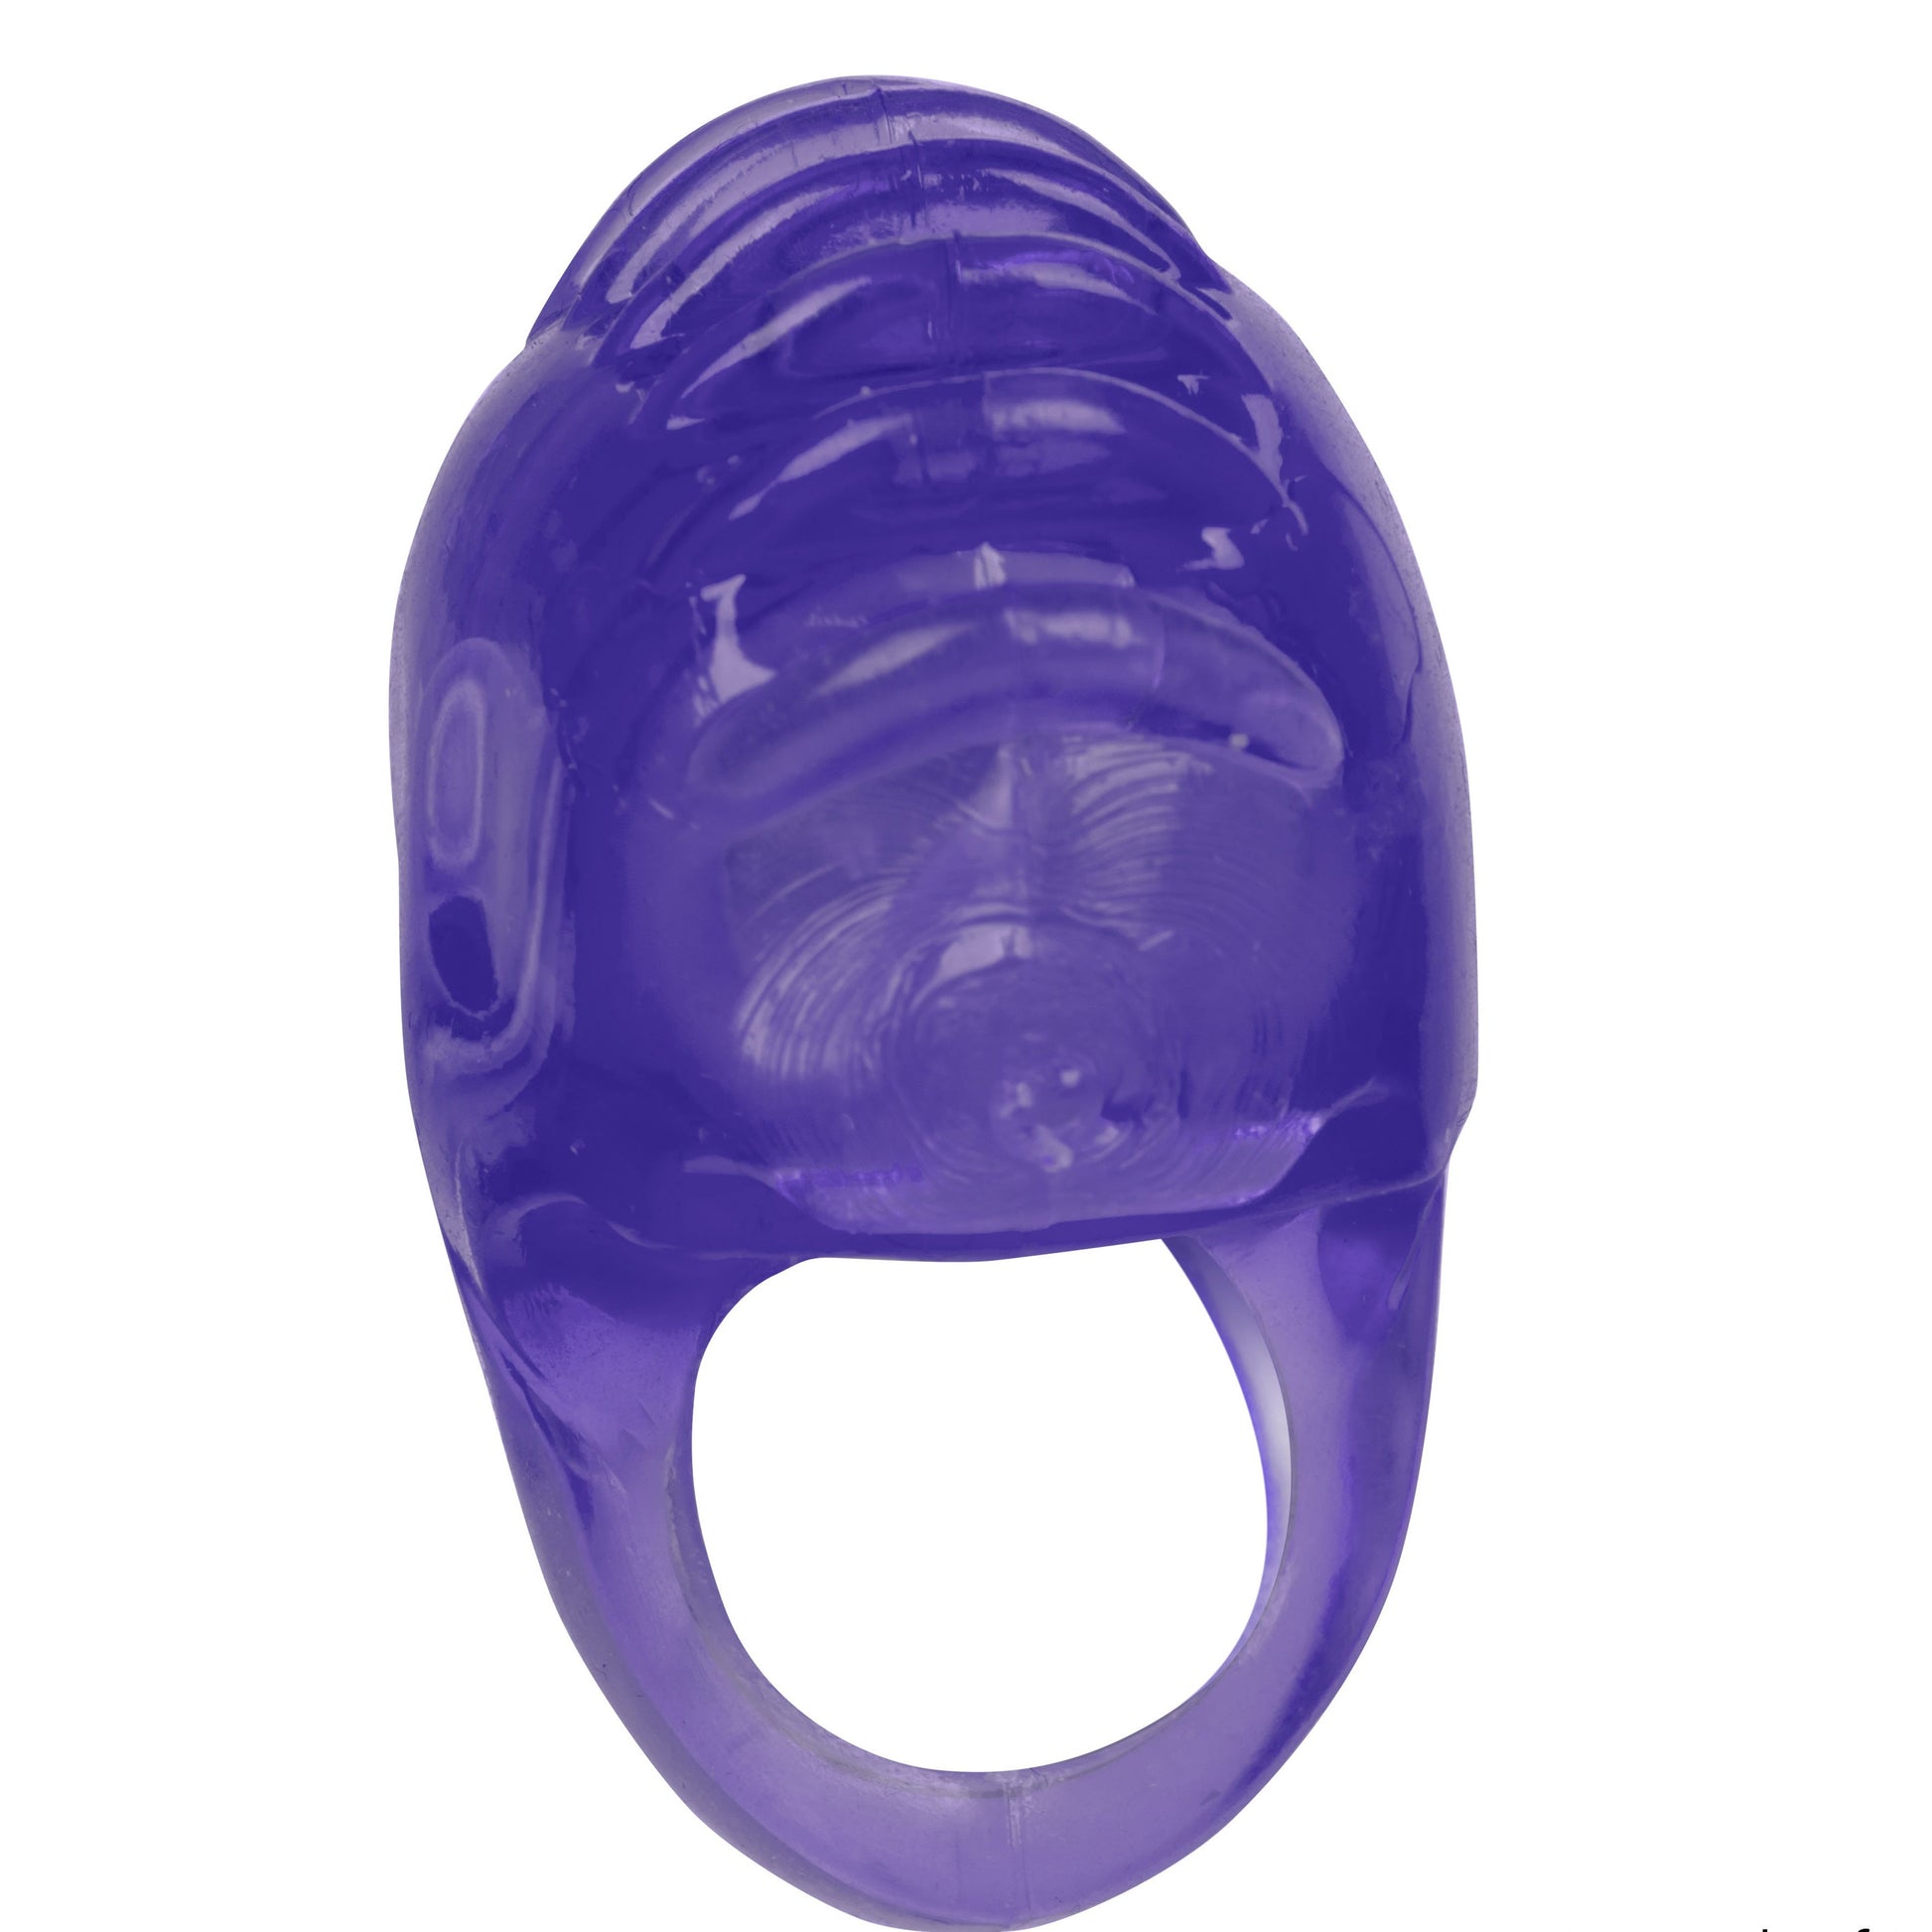 Foil Pack Vibrating Finger Teaser - Purple